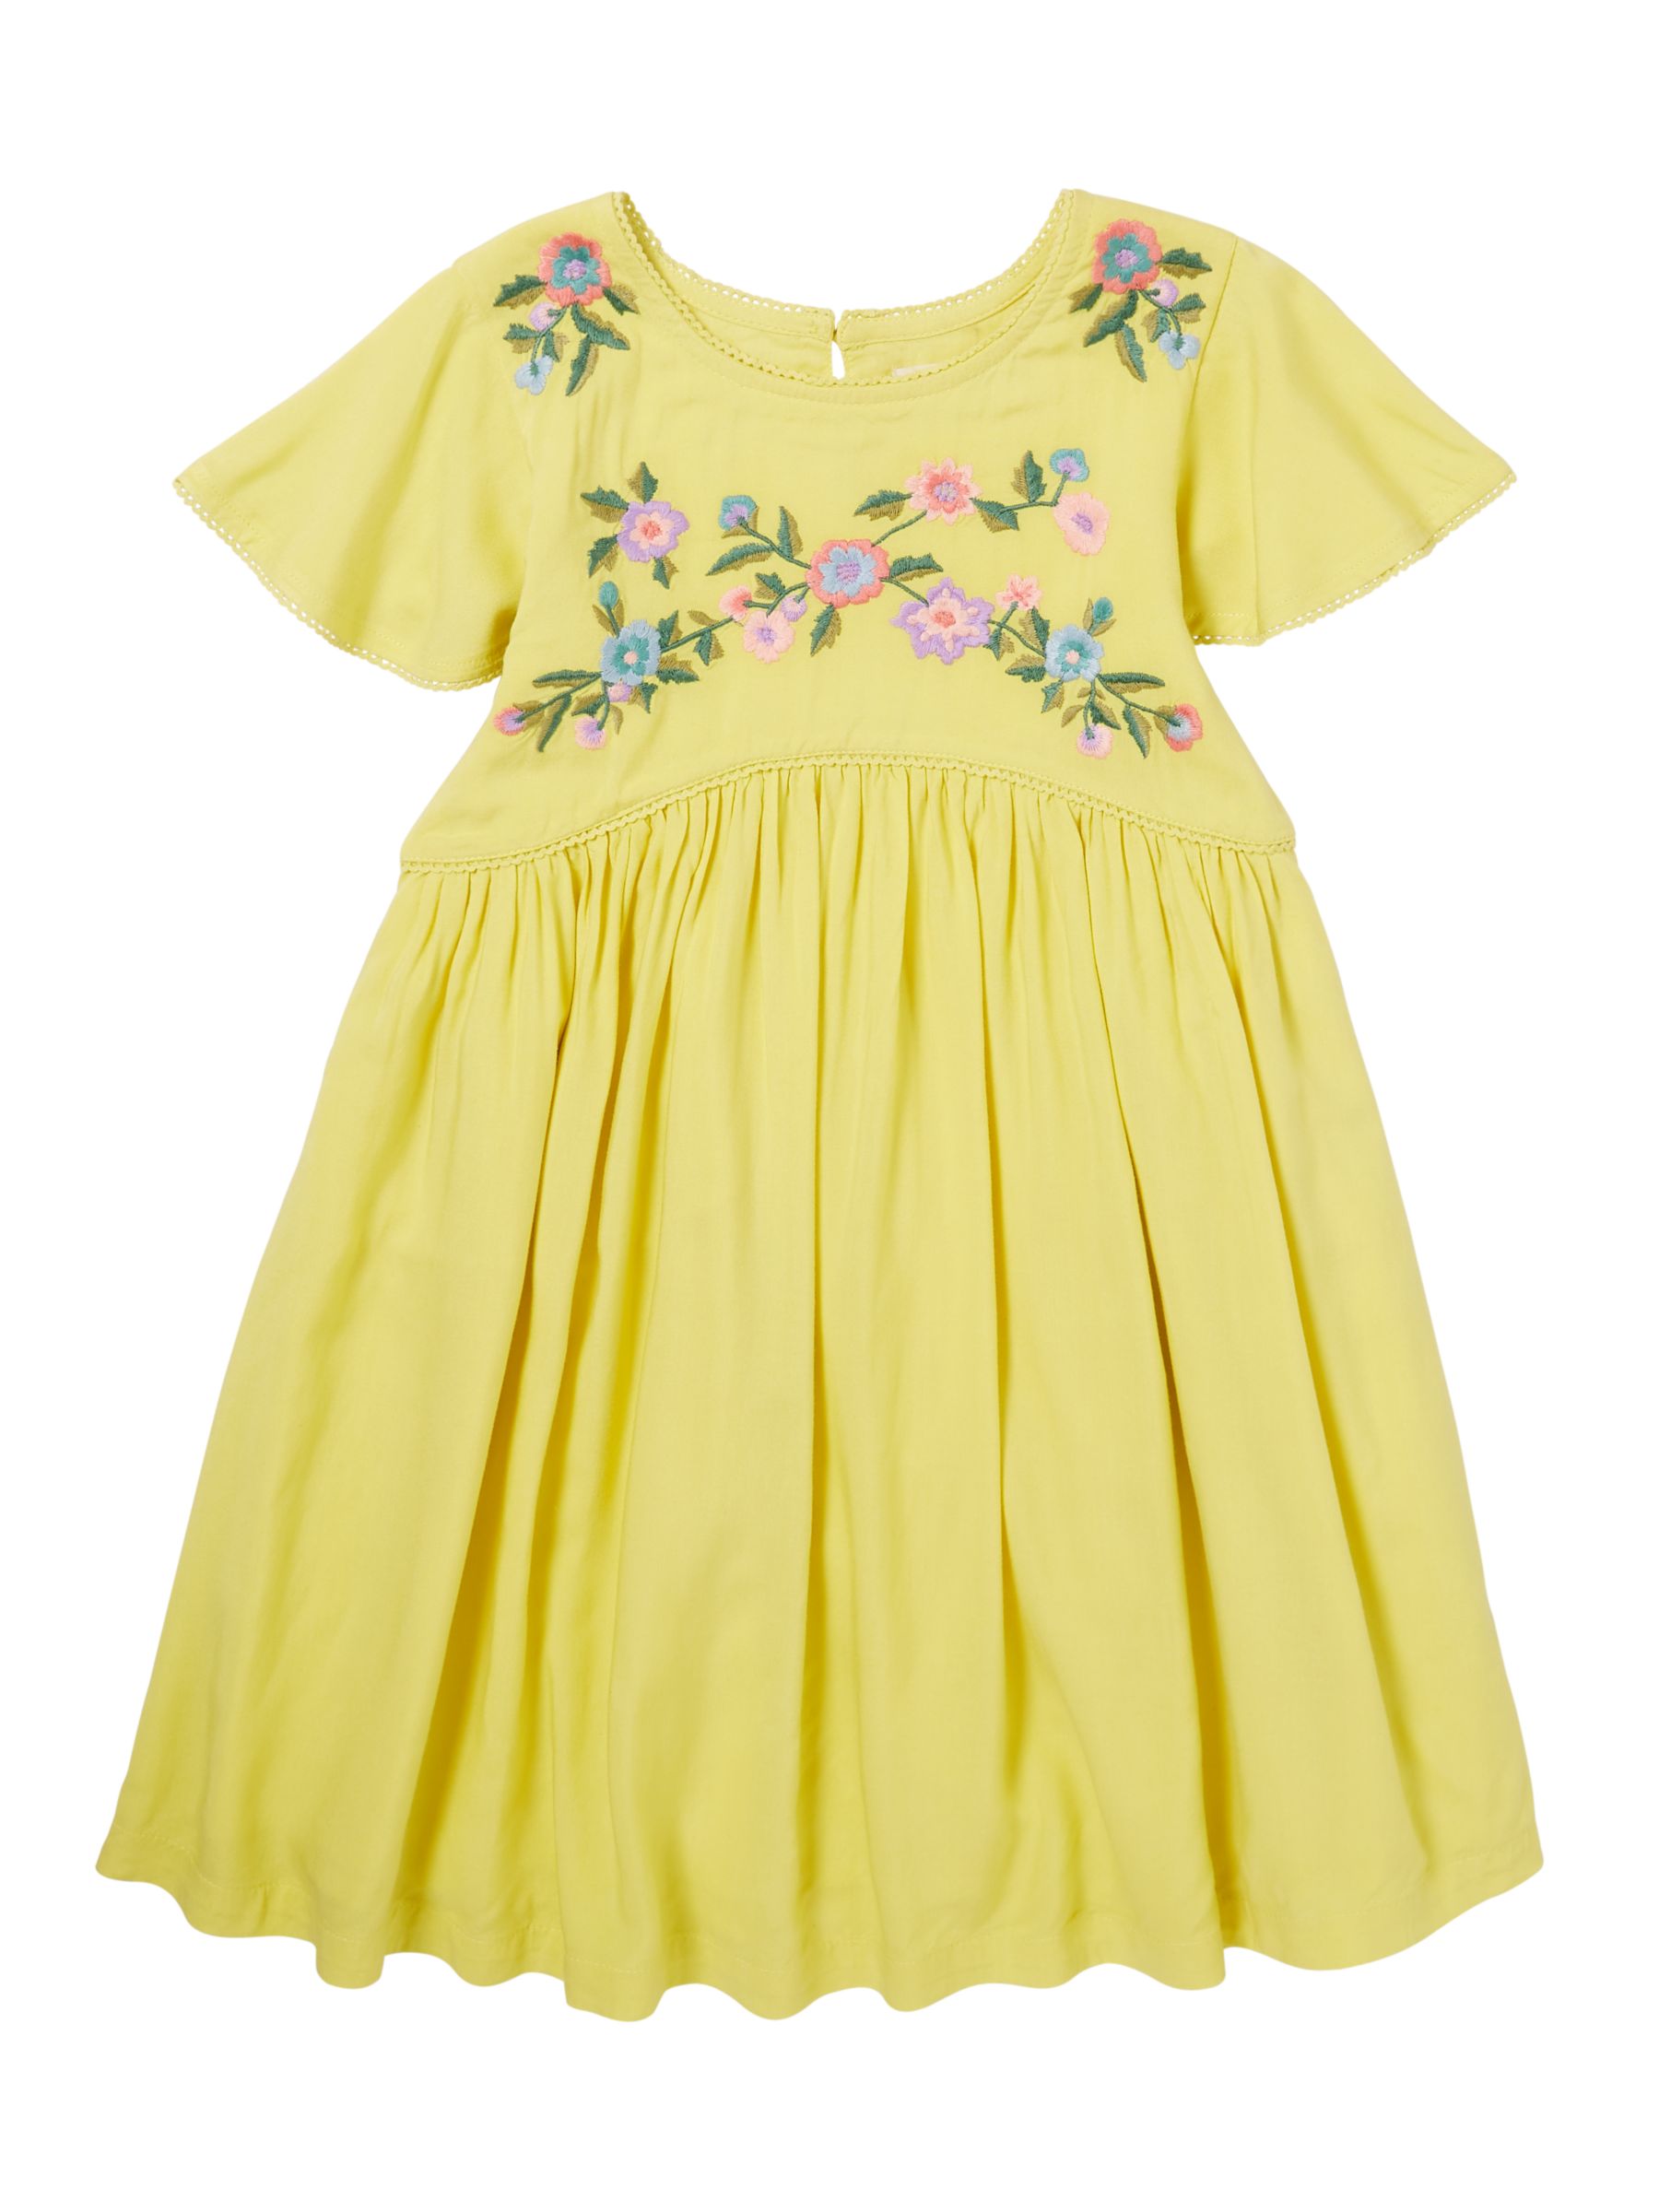 John Lewis & Partners Girls' Embroidered Yoke Dress, Yellow